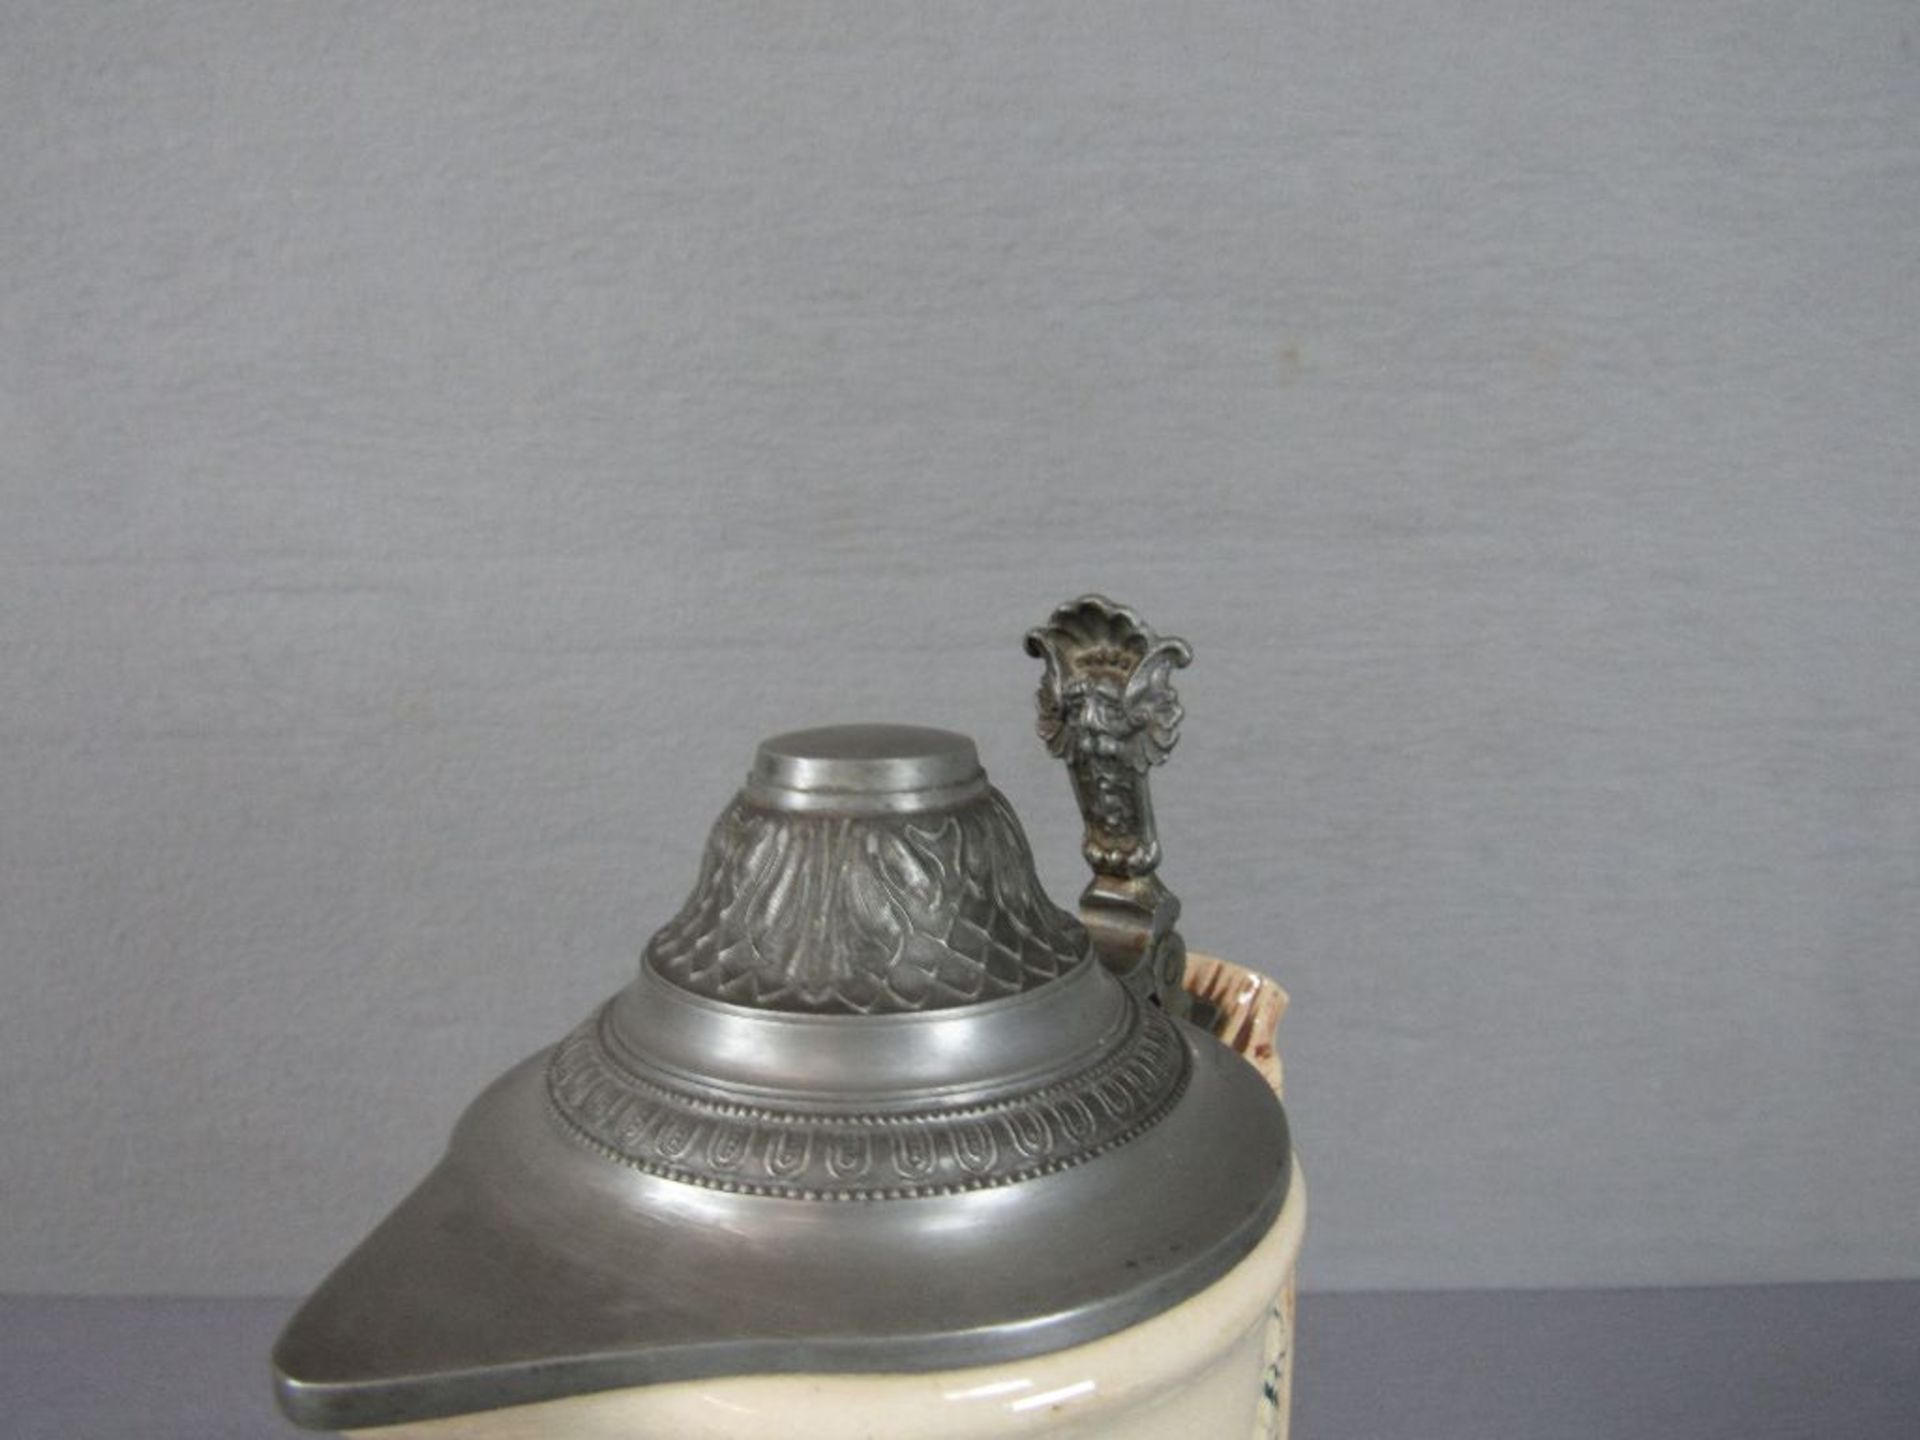 Großer Henkelbierkrug lasierte Keramik Villeroy&Boch um 1900 ca.32cm hoch - Image 6 of 7